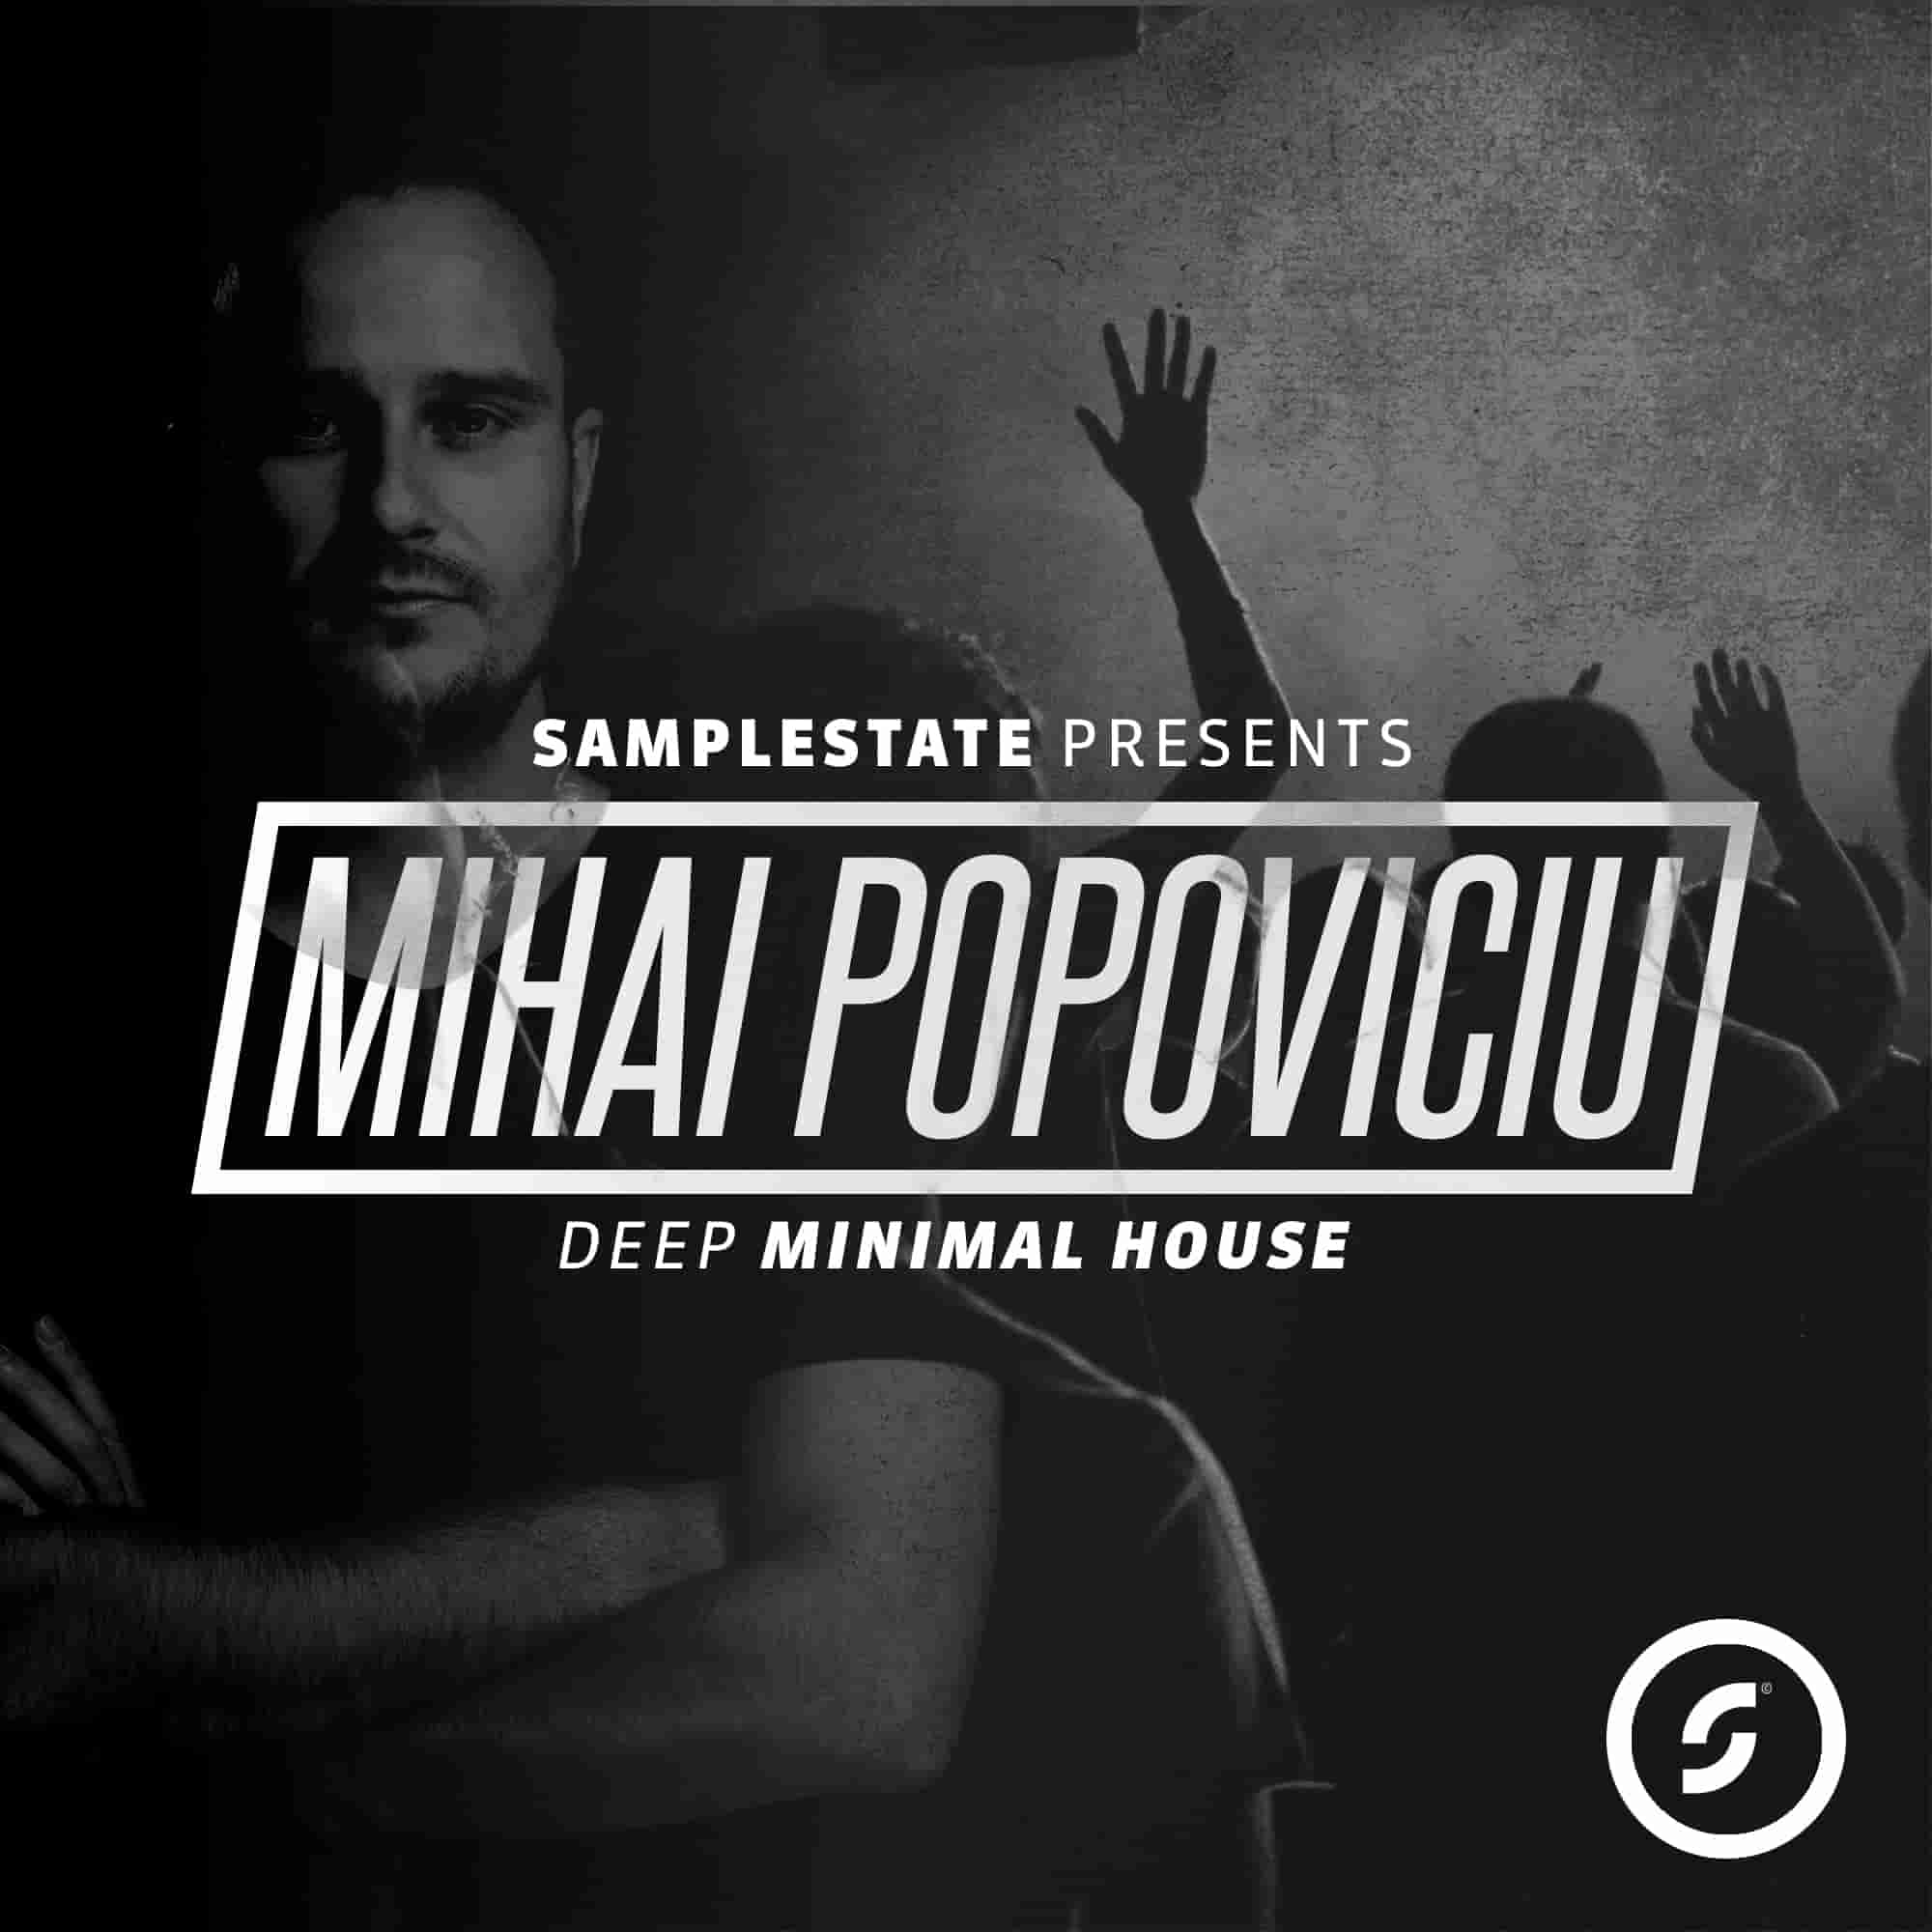 Mihai Popoviciu Deep Minimal House by Samplestate